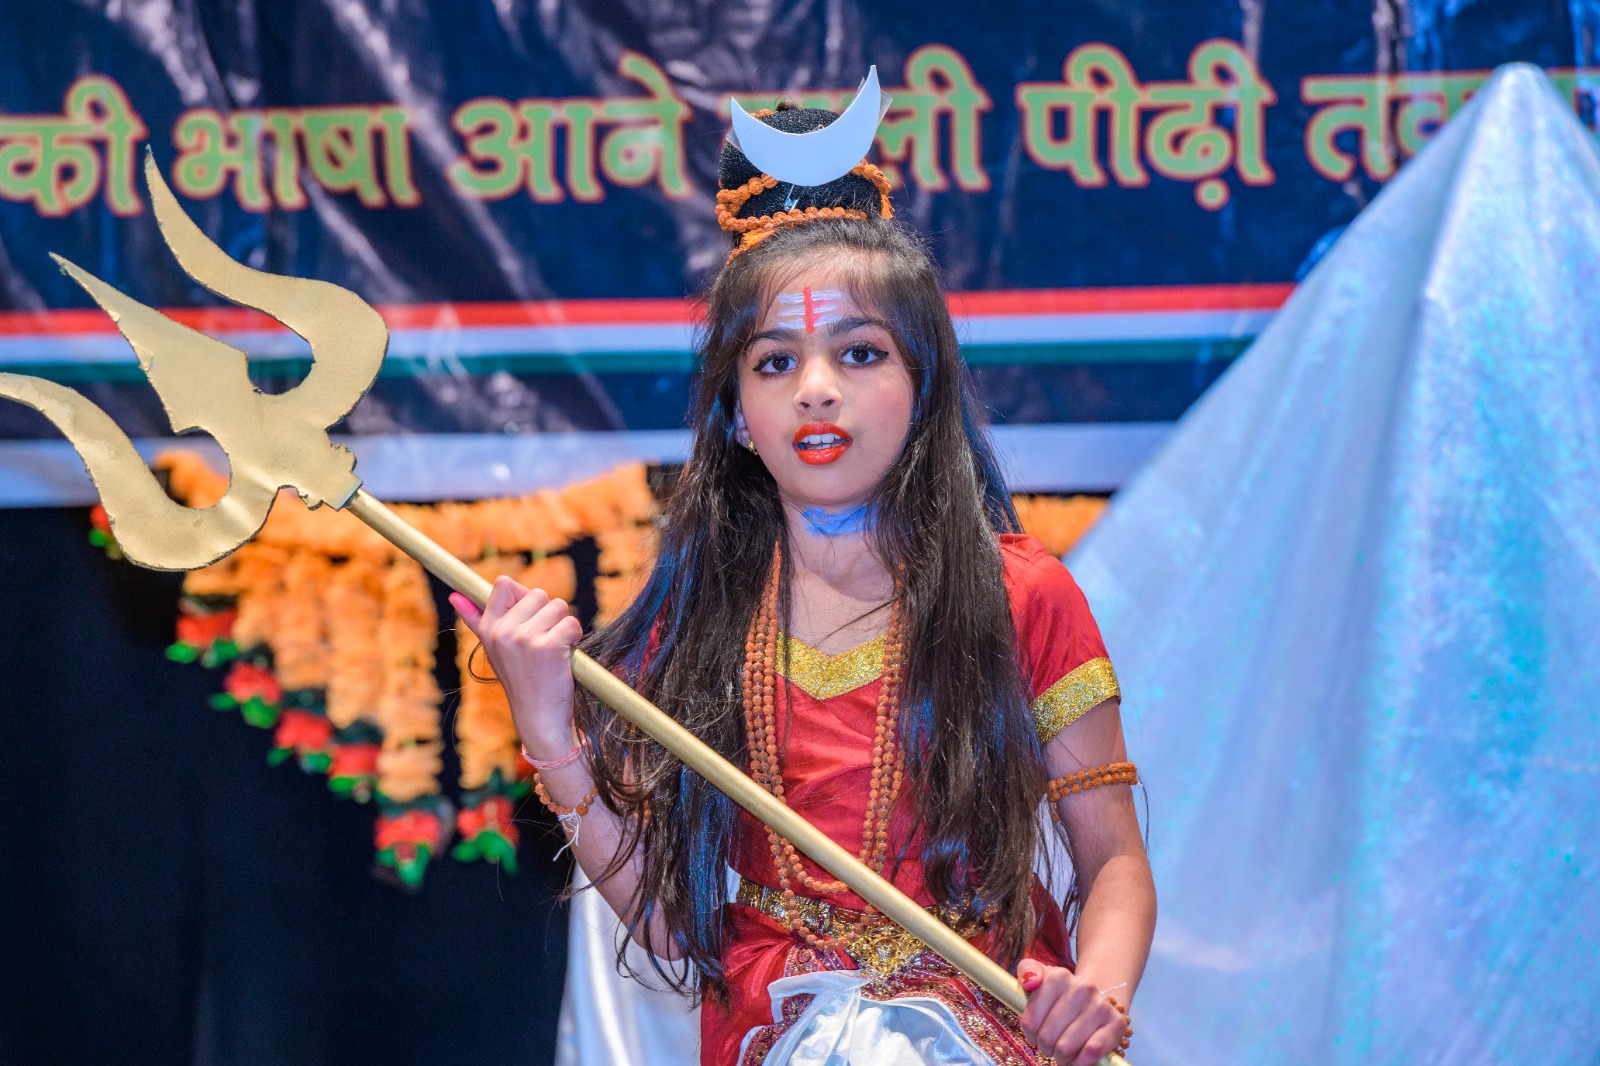 Hindi USA Mahautsav 2019